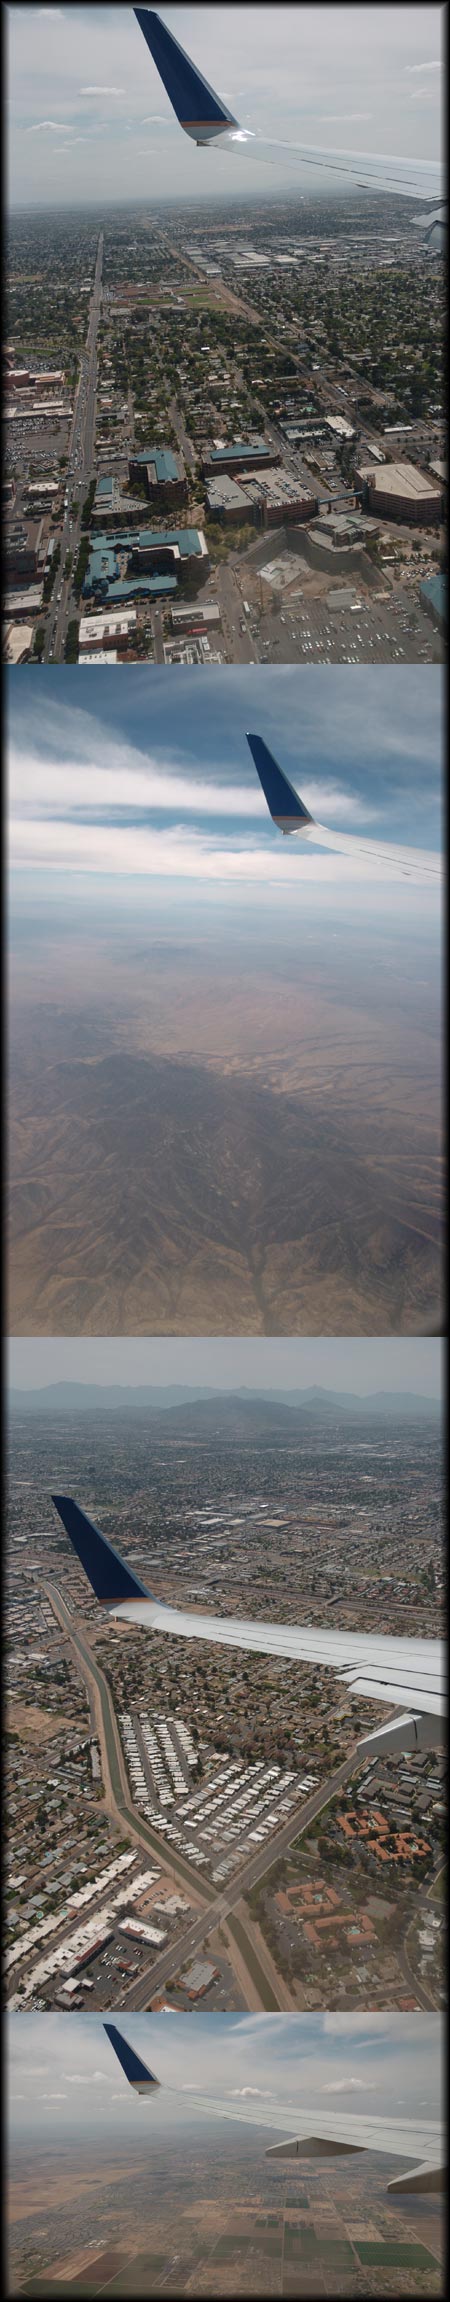 Phoenix Am 2006 - Plane Photos